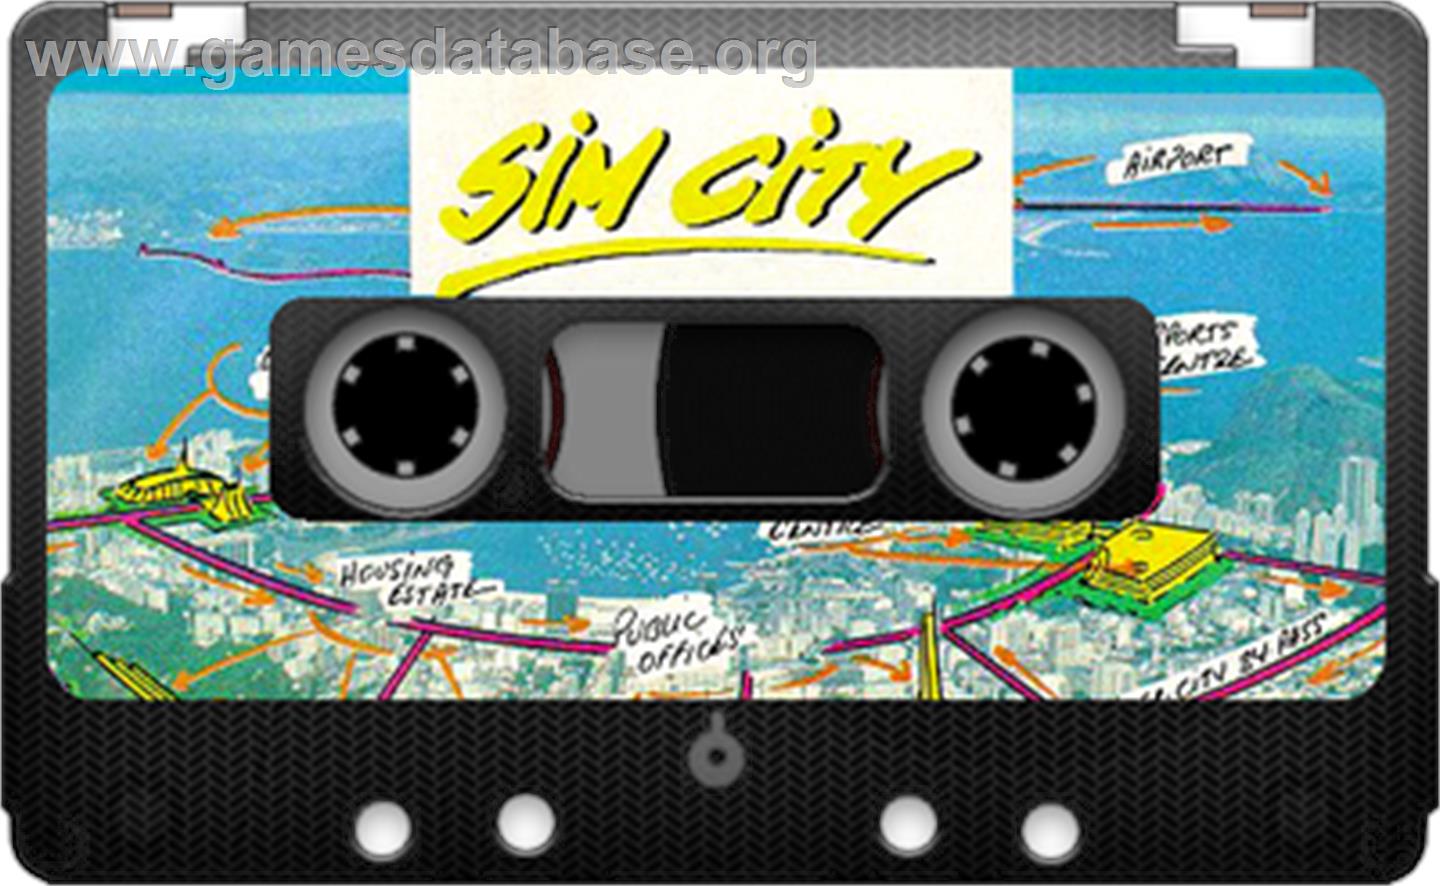 SimCity - Sinclair ZX Spectrum - Artwork - Cartridge